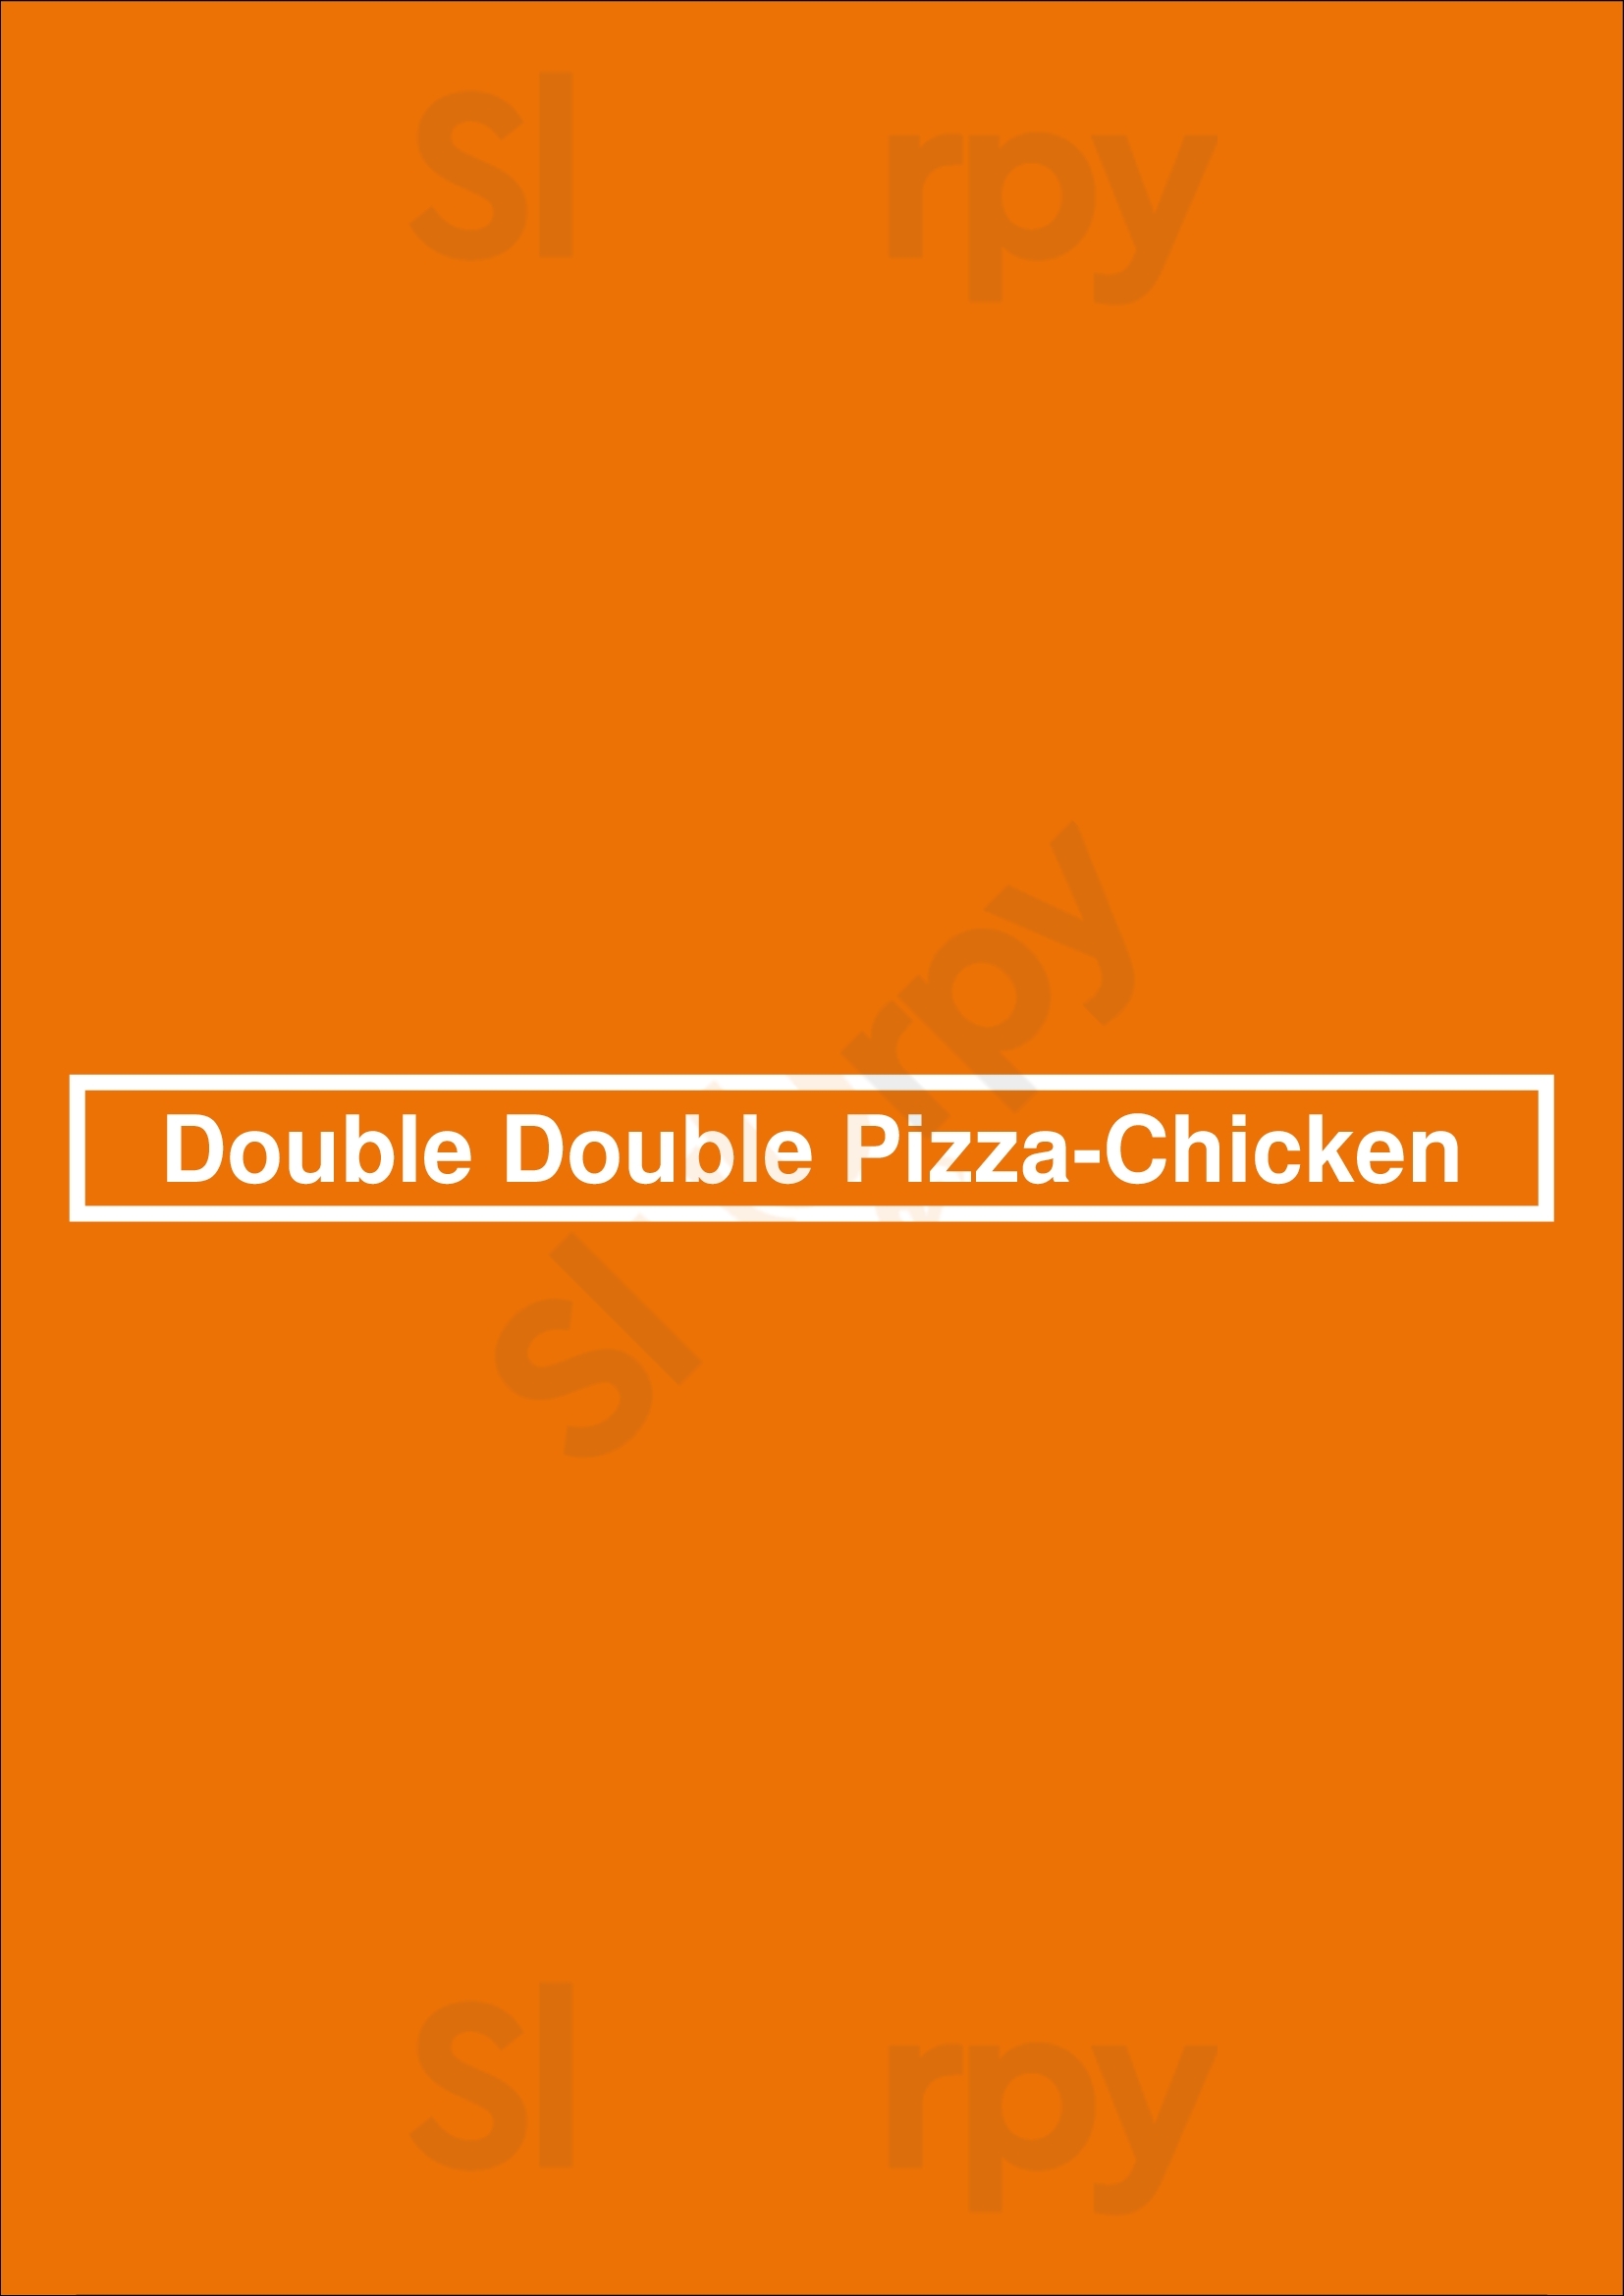 Double Double Pizza-chicken Kingston Menu - 1